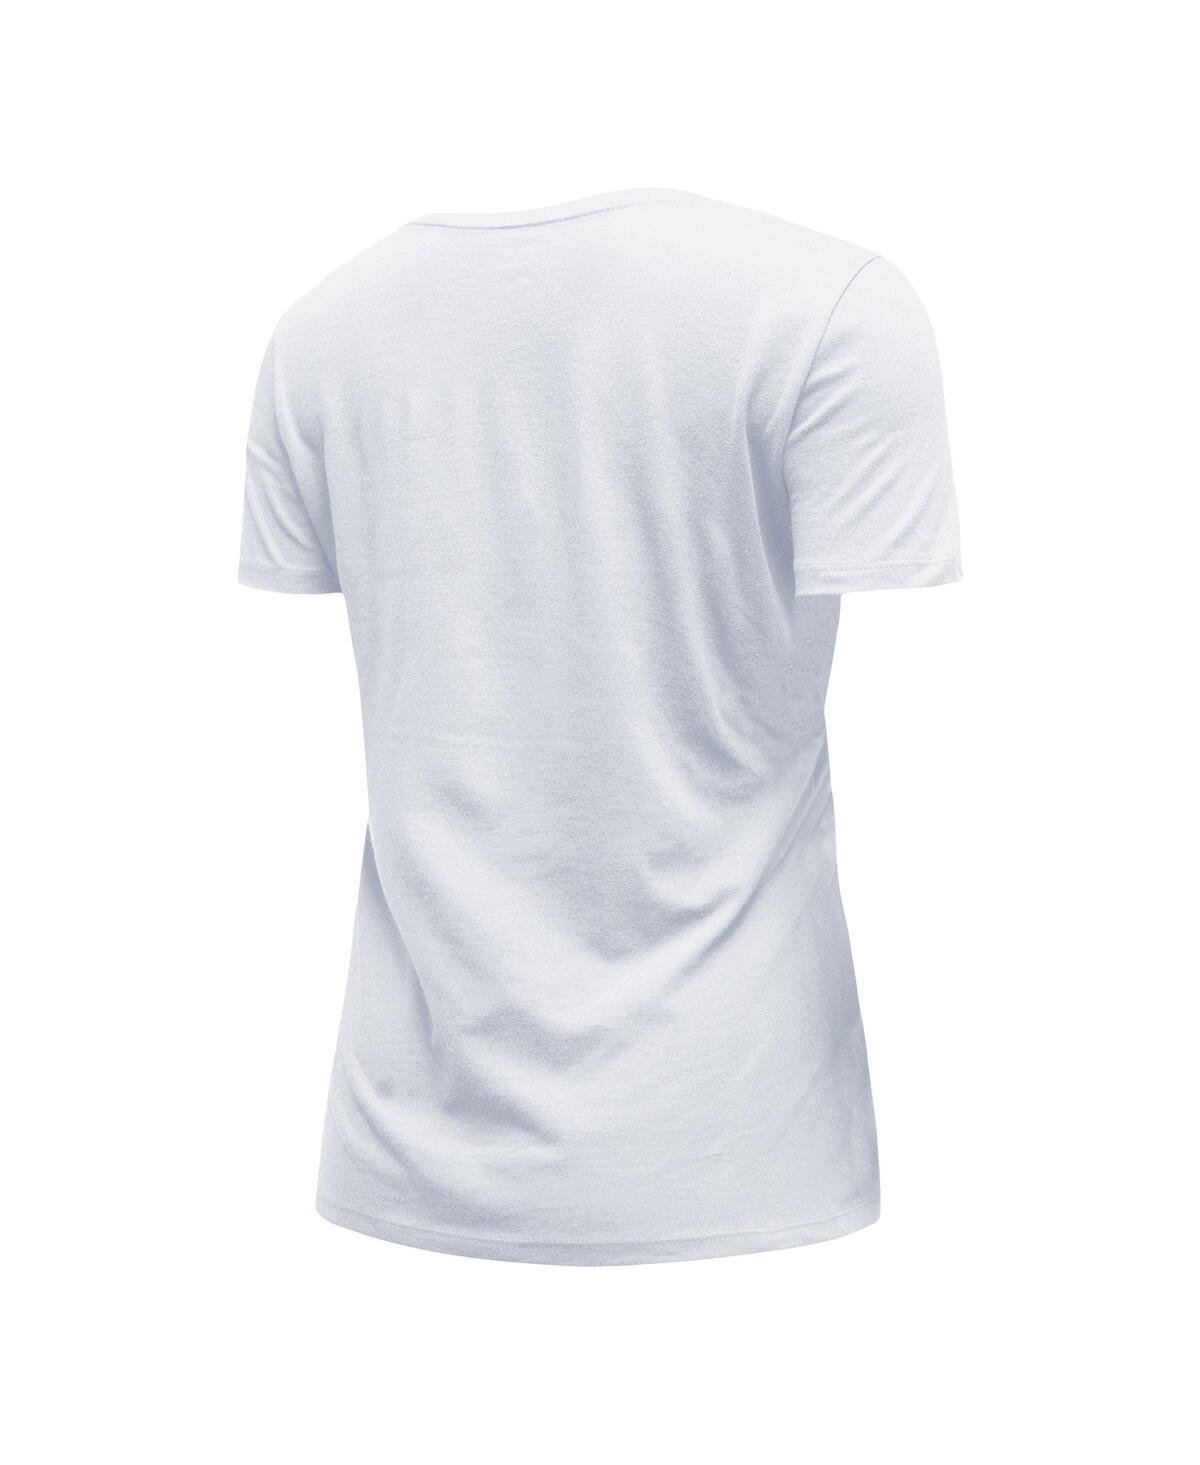 Shop New Era Women's  White Seattle Seahawks City Originals V-neck T-shirt